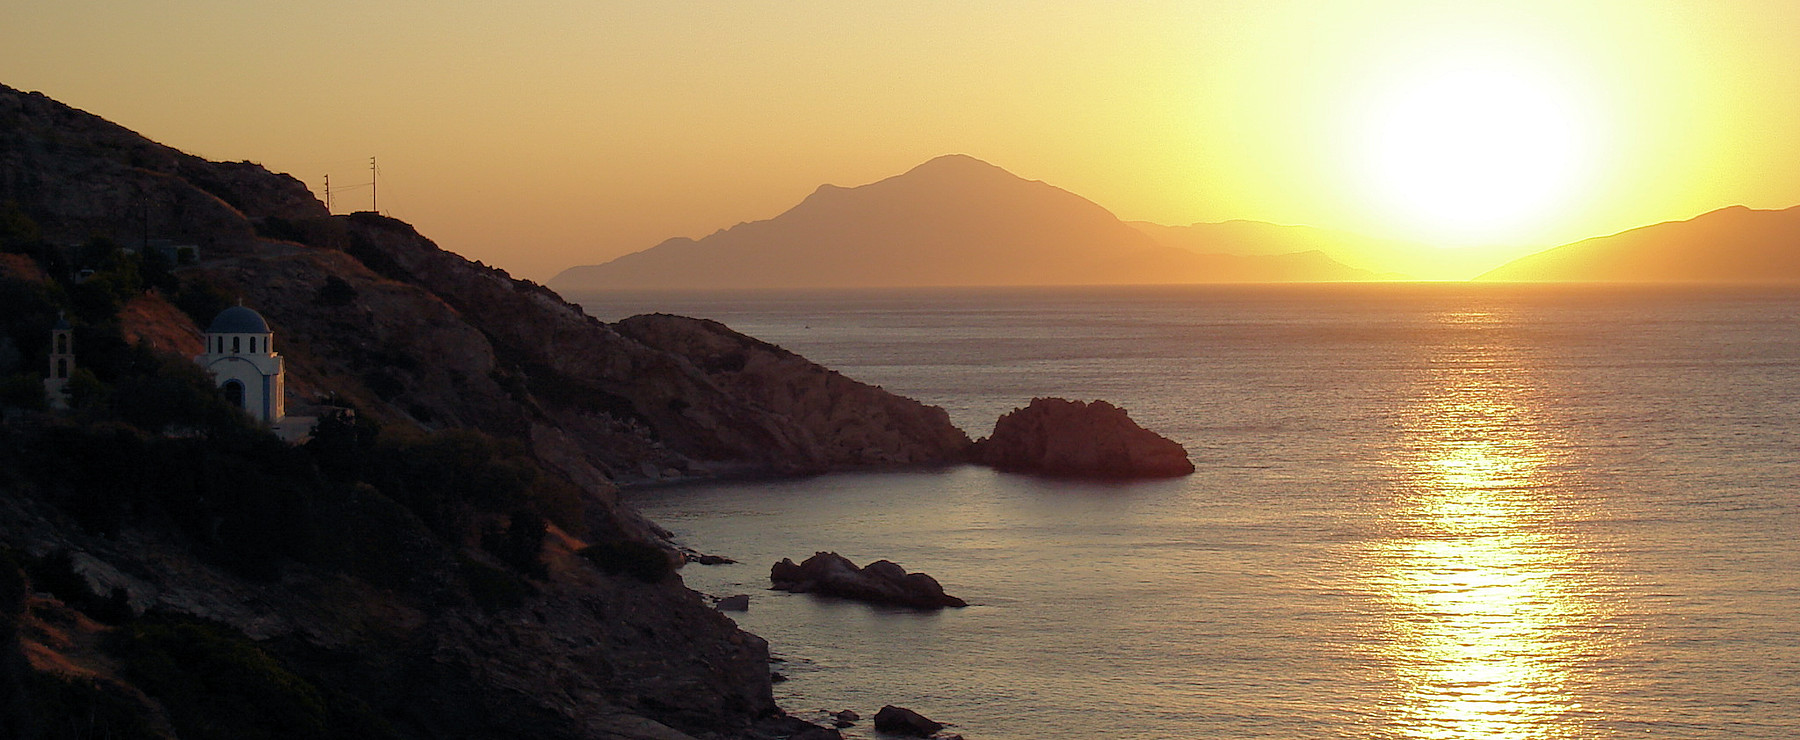 North-East Aegean Islands